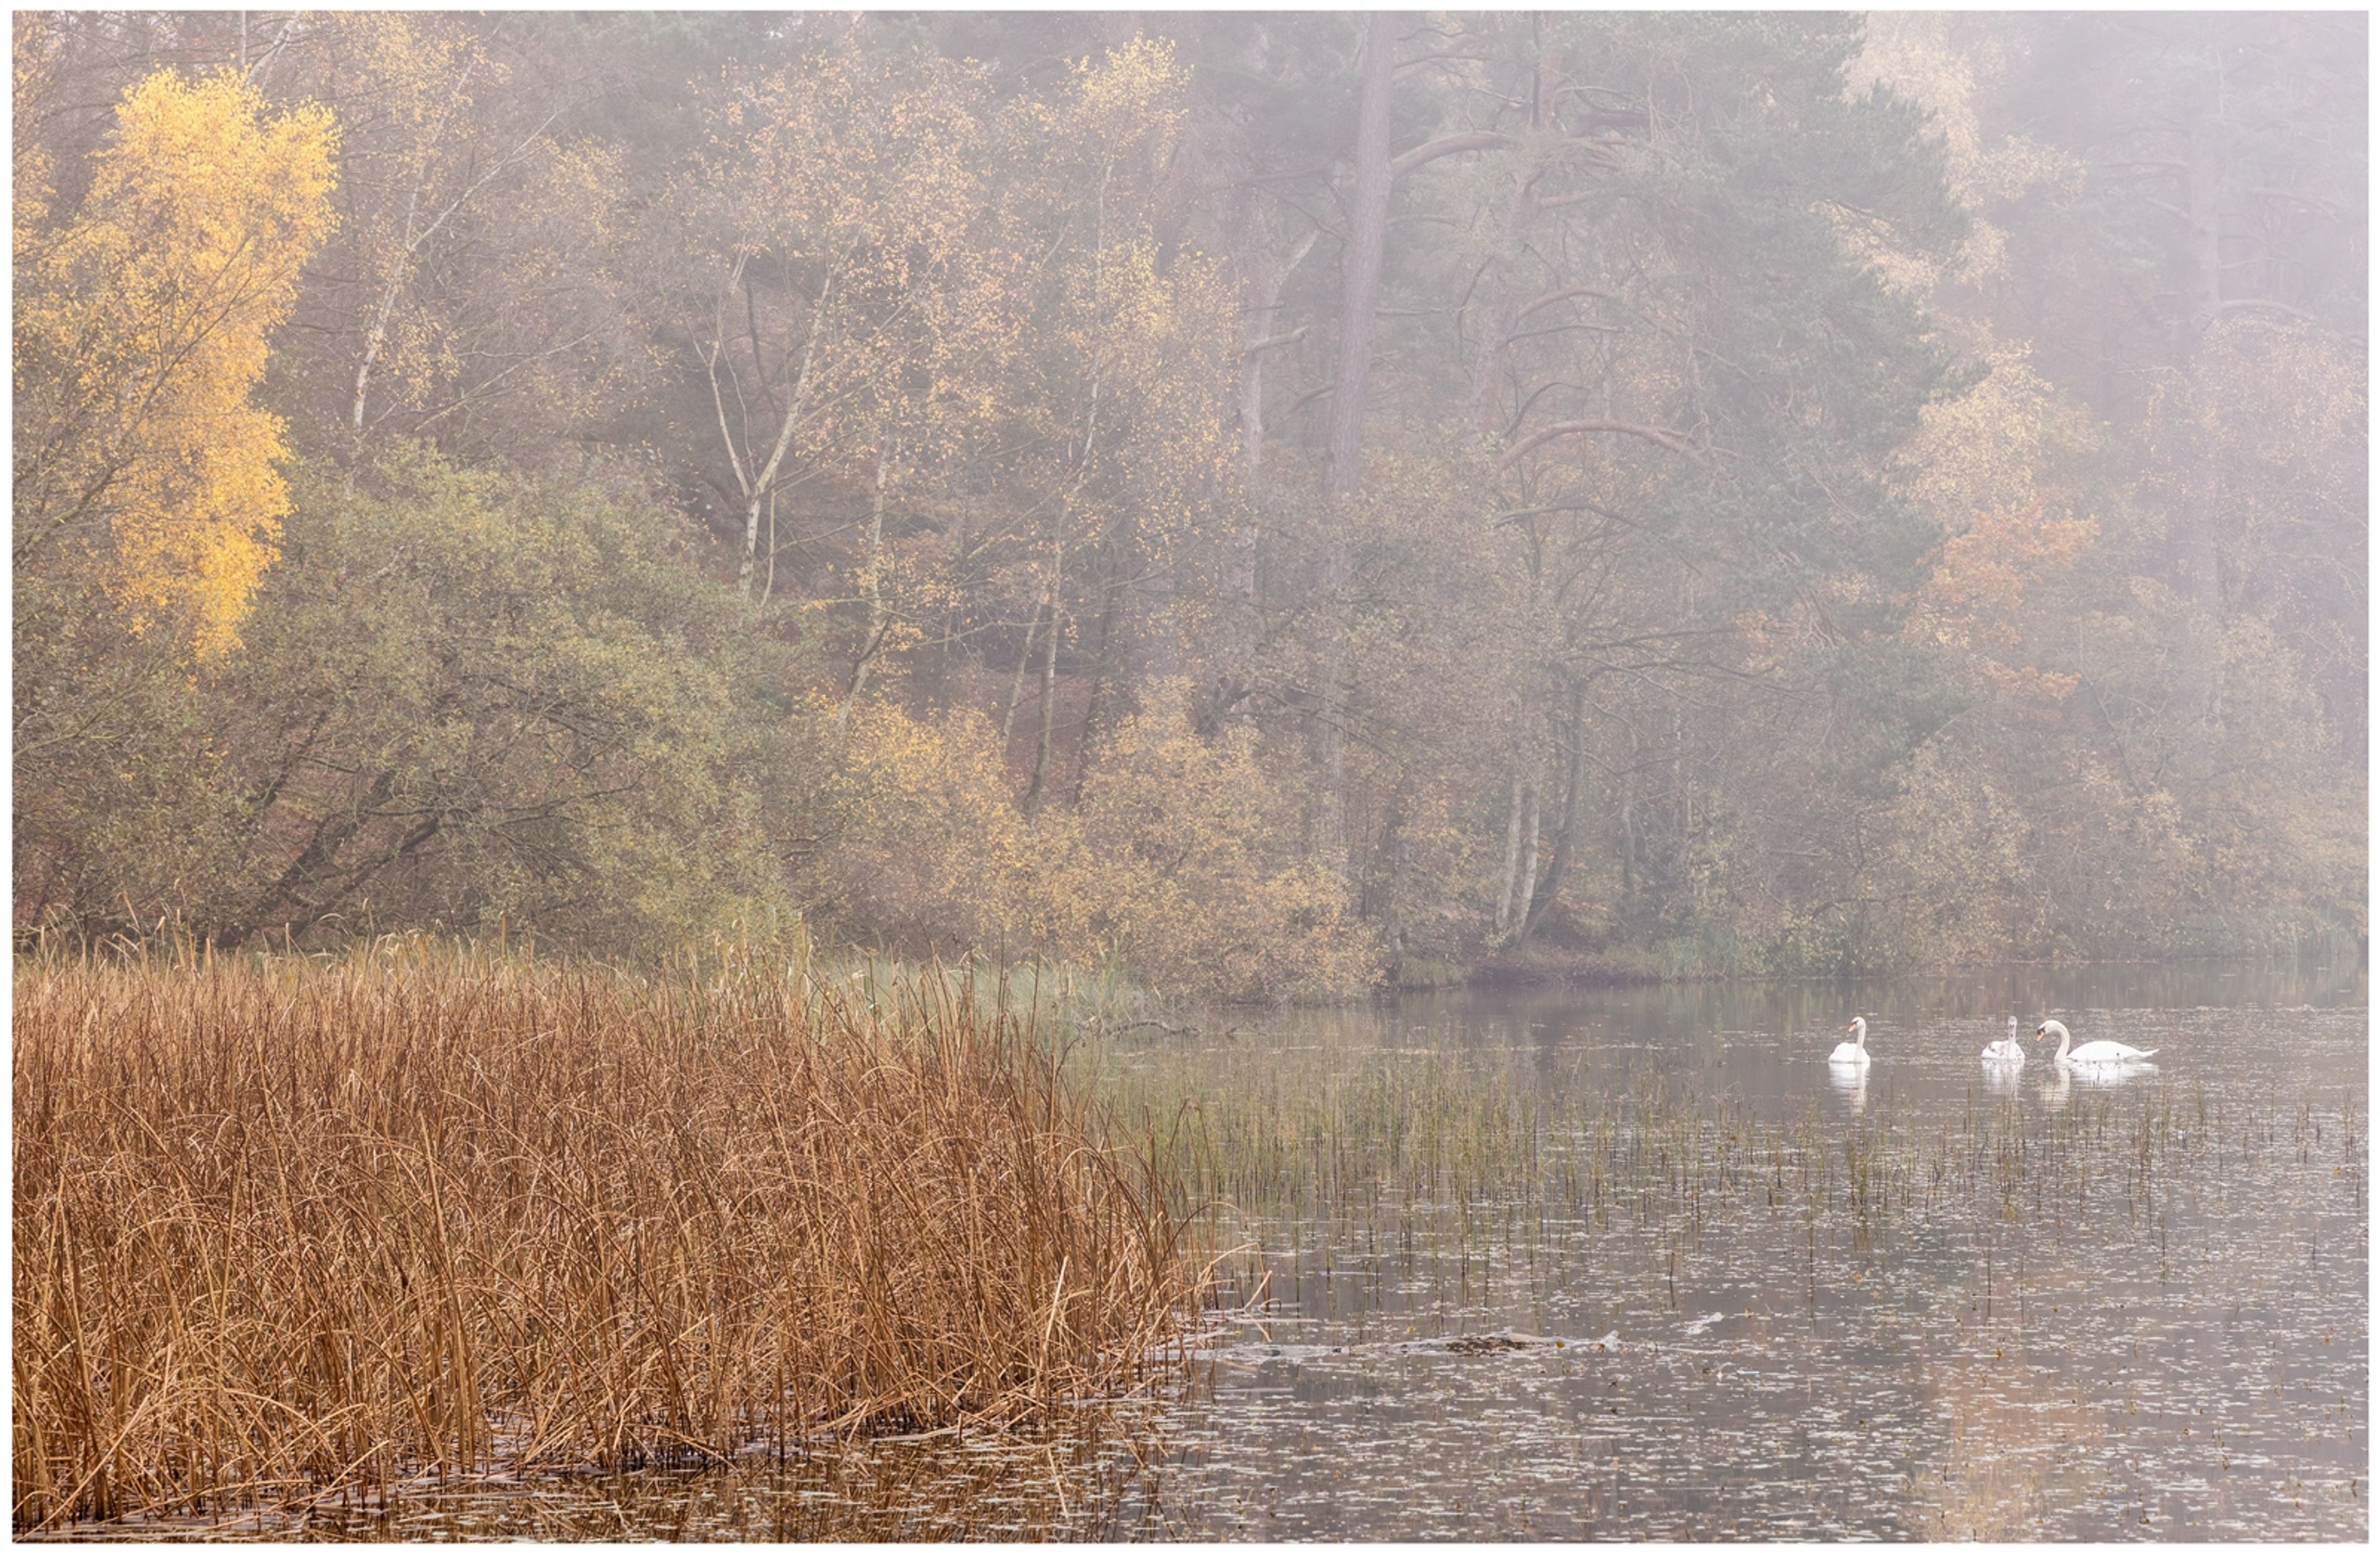 Swans In The Mist by Antony Ward